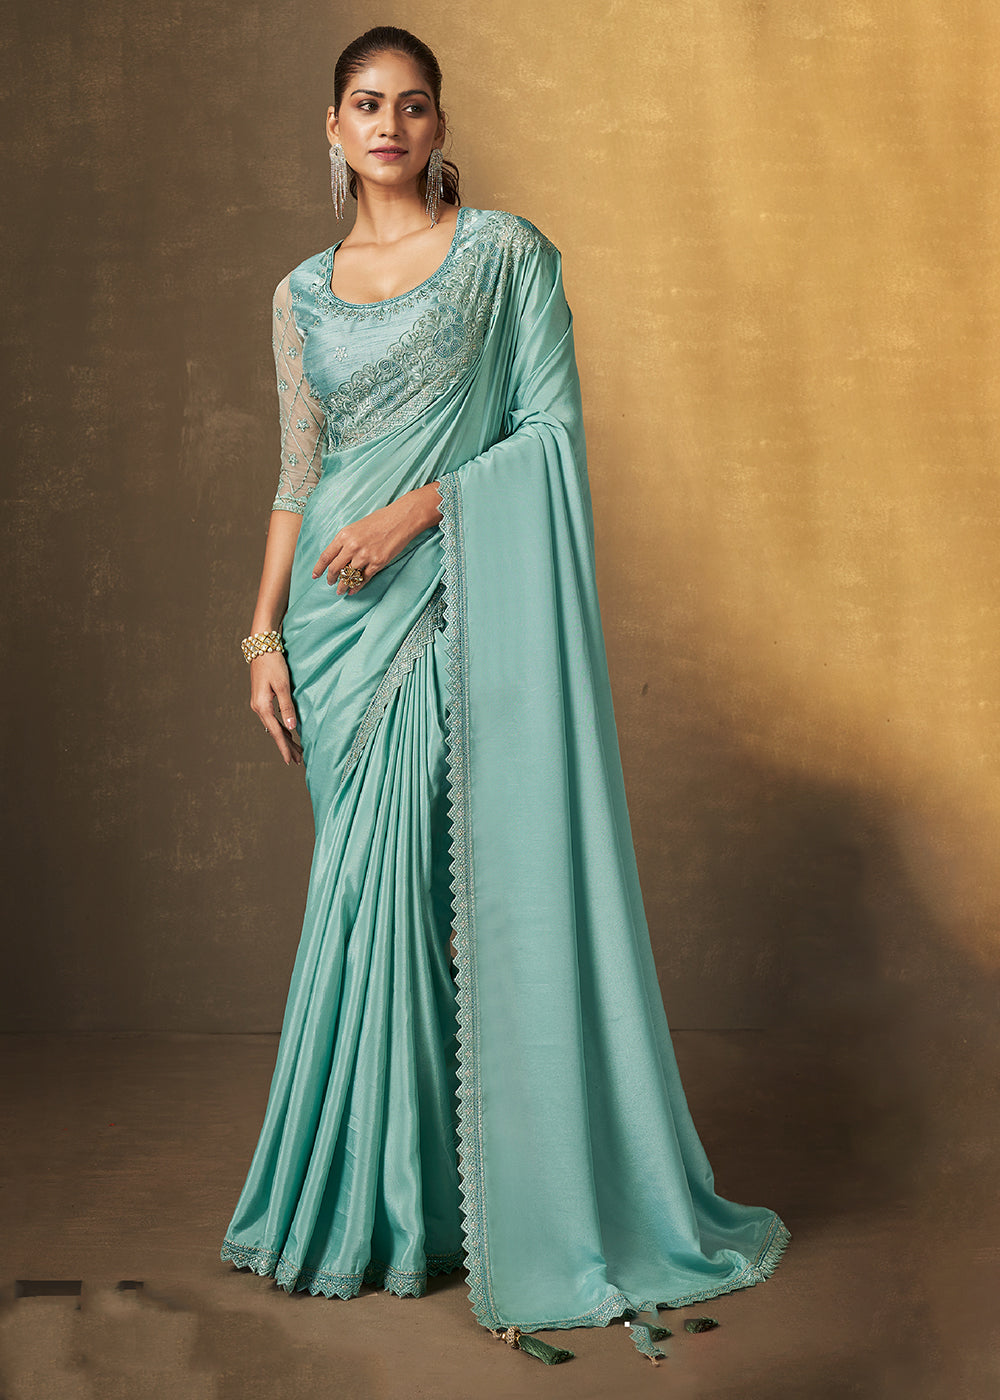 Buy Now Vista Blue Crepe Georgette Silk Designer Saree Online in USA, UK, Canada & Worldwide at Empress Clothing. 